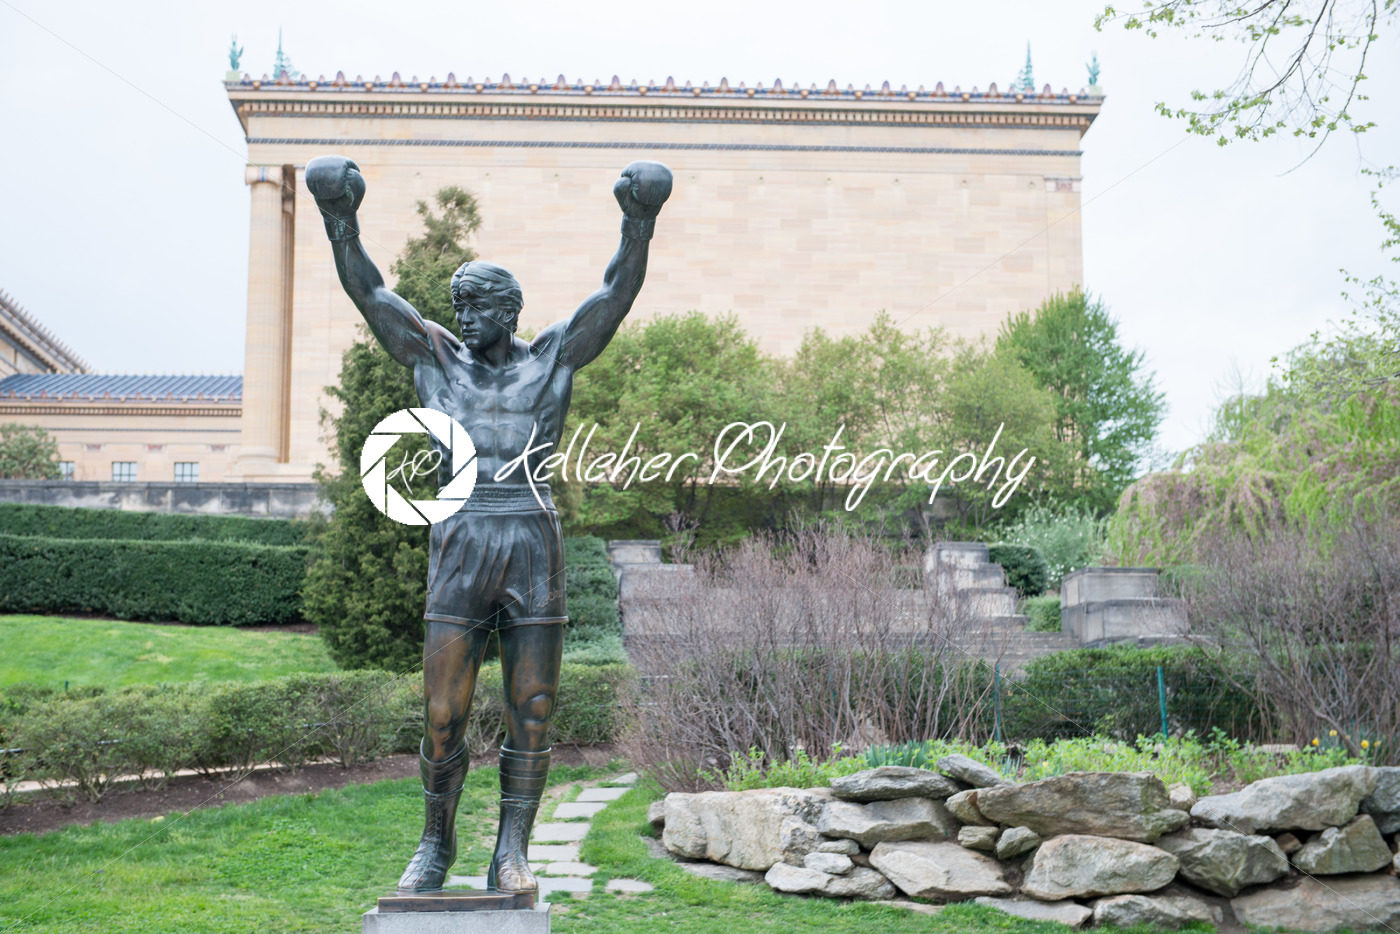 PHILADELPHIA, PA – APRIL 19: The Rocky Statue outside of the Philadelphia Museum of Art on April 19, 2013 - Kelleher Photography Store